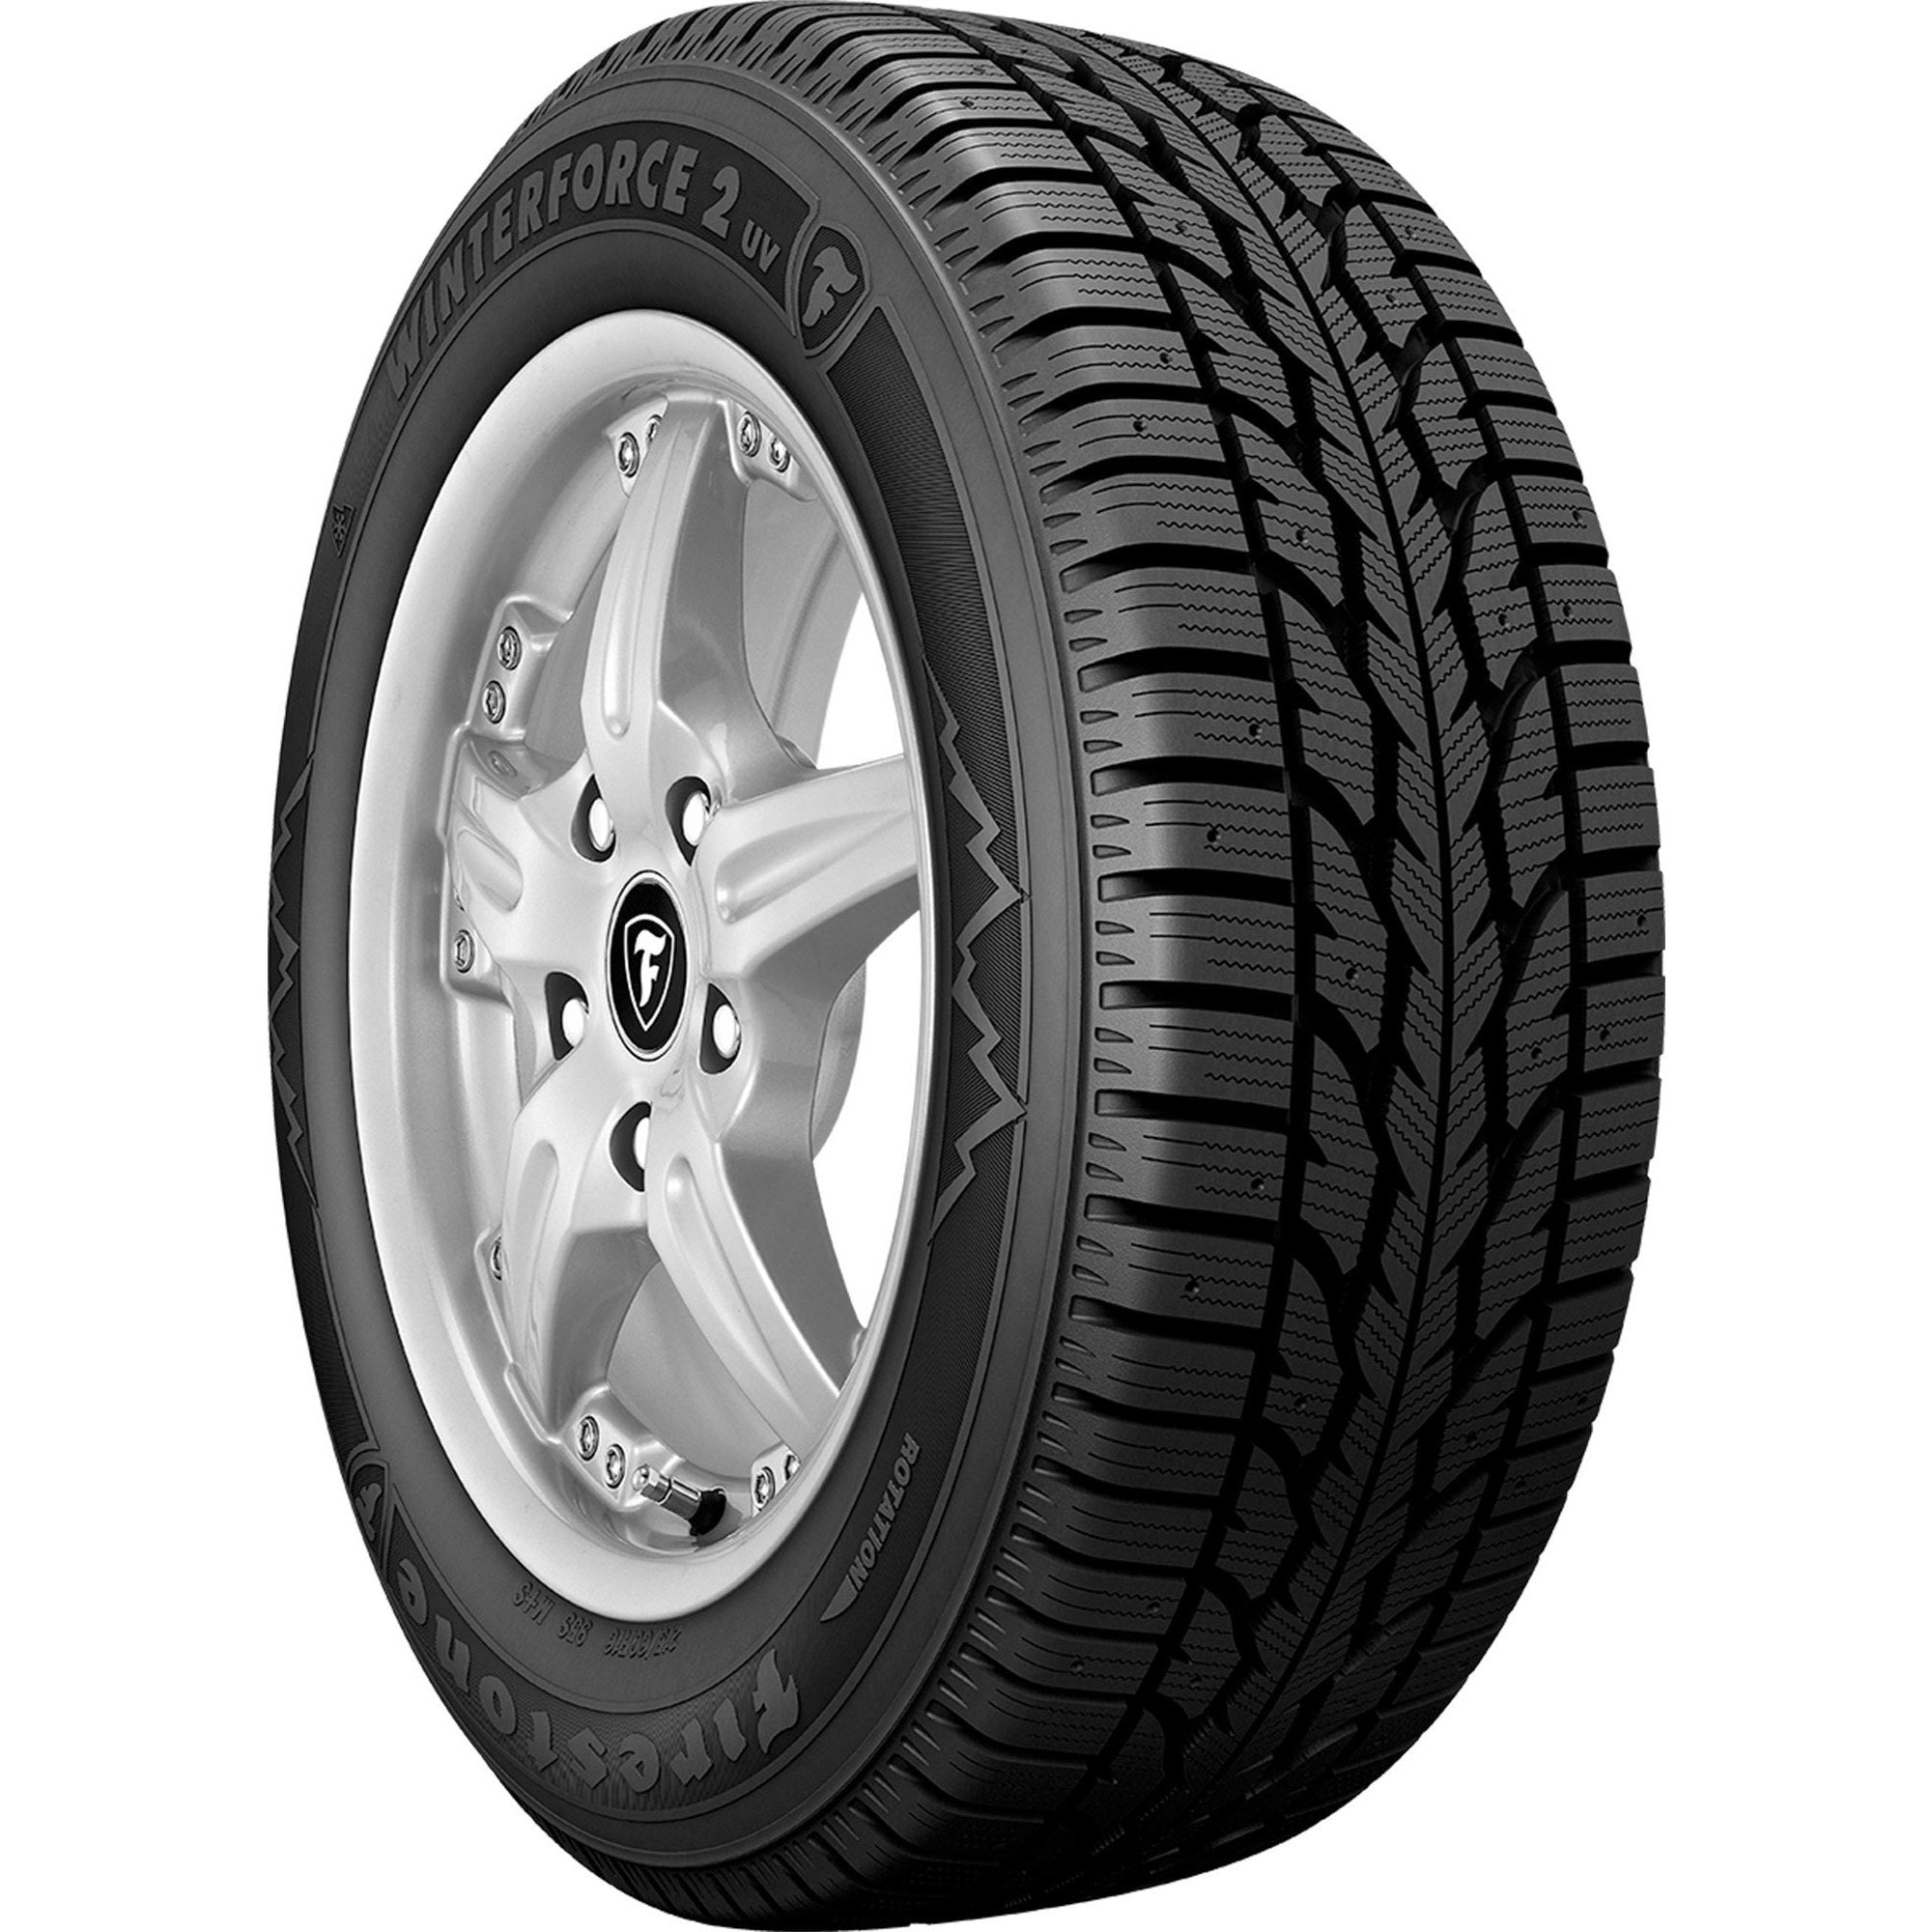 FIRESTONE WINTERFORCE2 UV 265/70R16 (30.6X10.4R 16) Tires